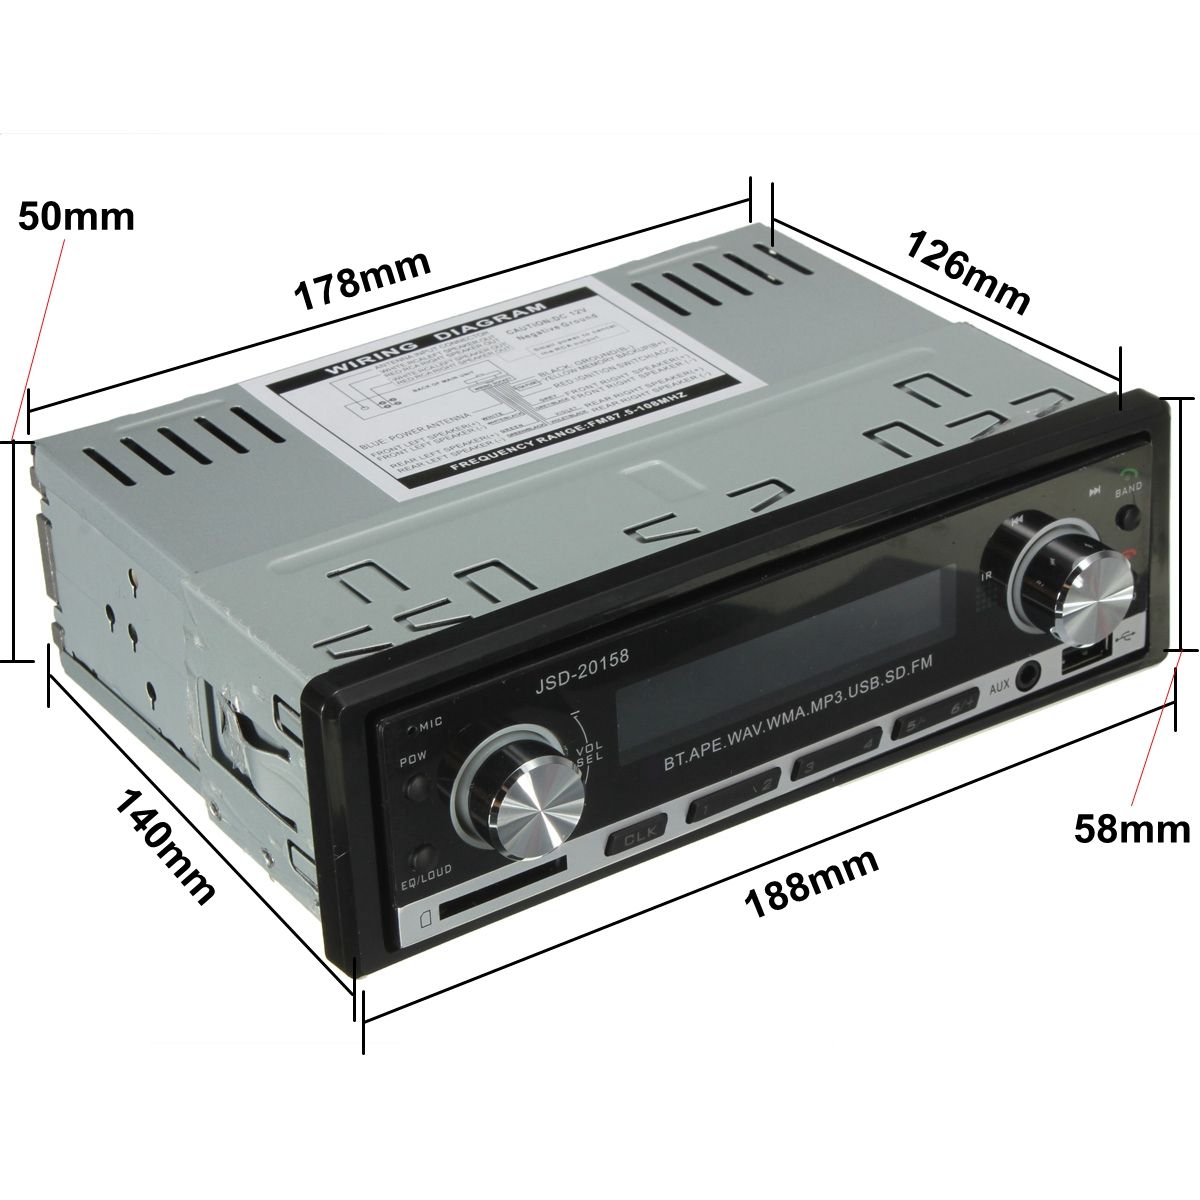 12V-DIN-Auto-Radio-bluetooth-Stereo-Audio-Head-Unit-Player-Car-MP3-Player-Stereo-With-FM-Radio-Multi-1009293